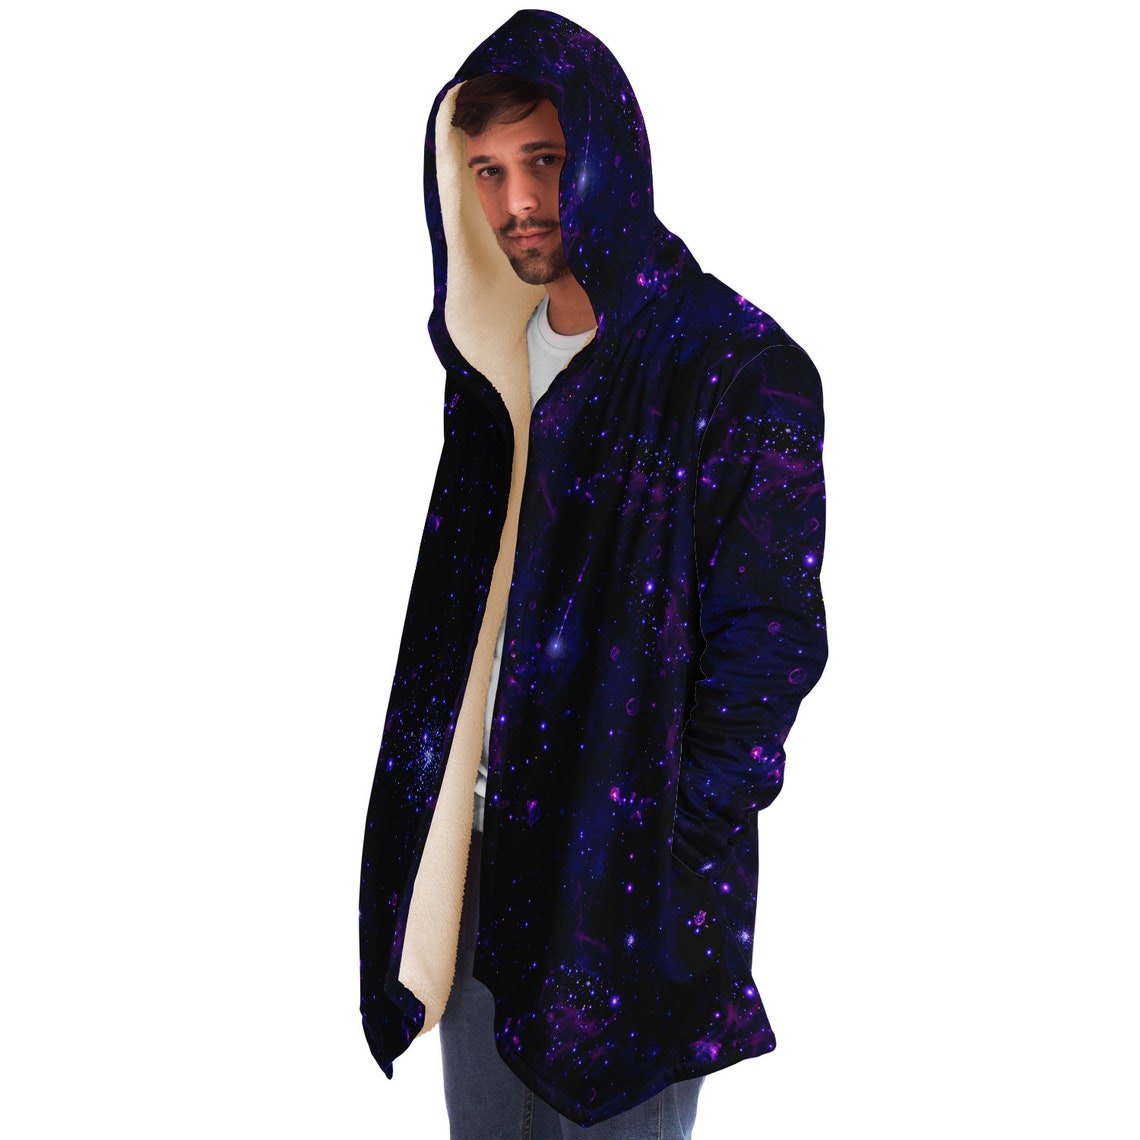 Hooded Cloak Galaxy design pattern hooded cloak High | Etsy